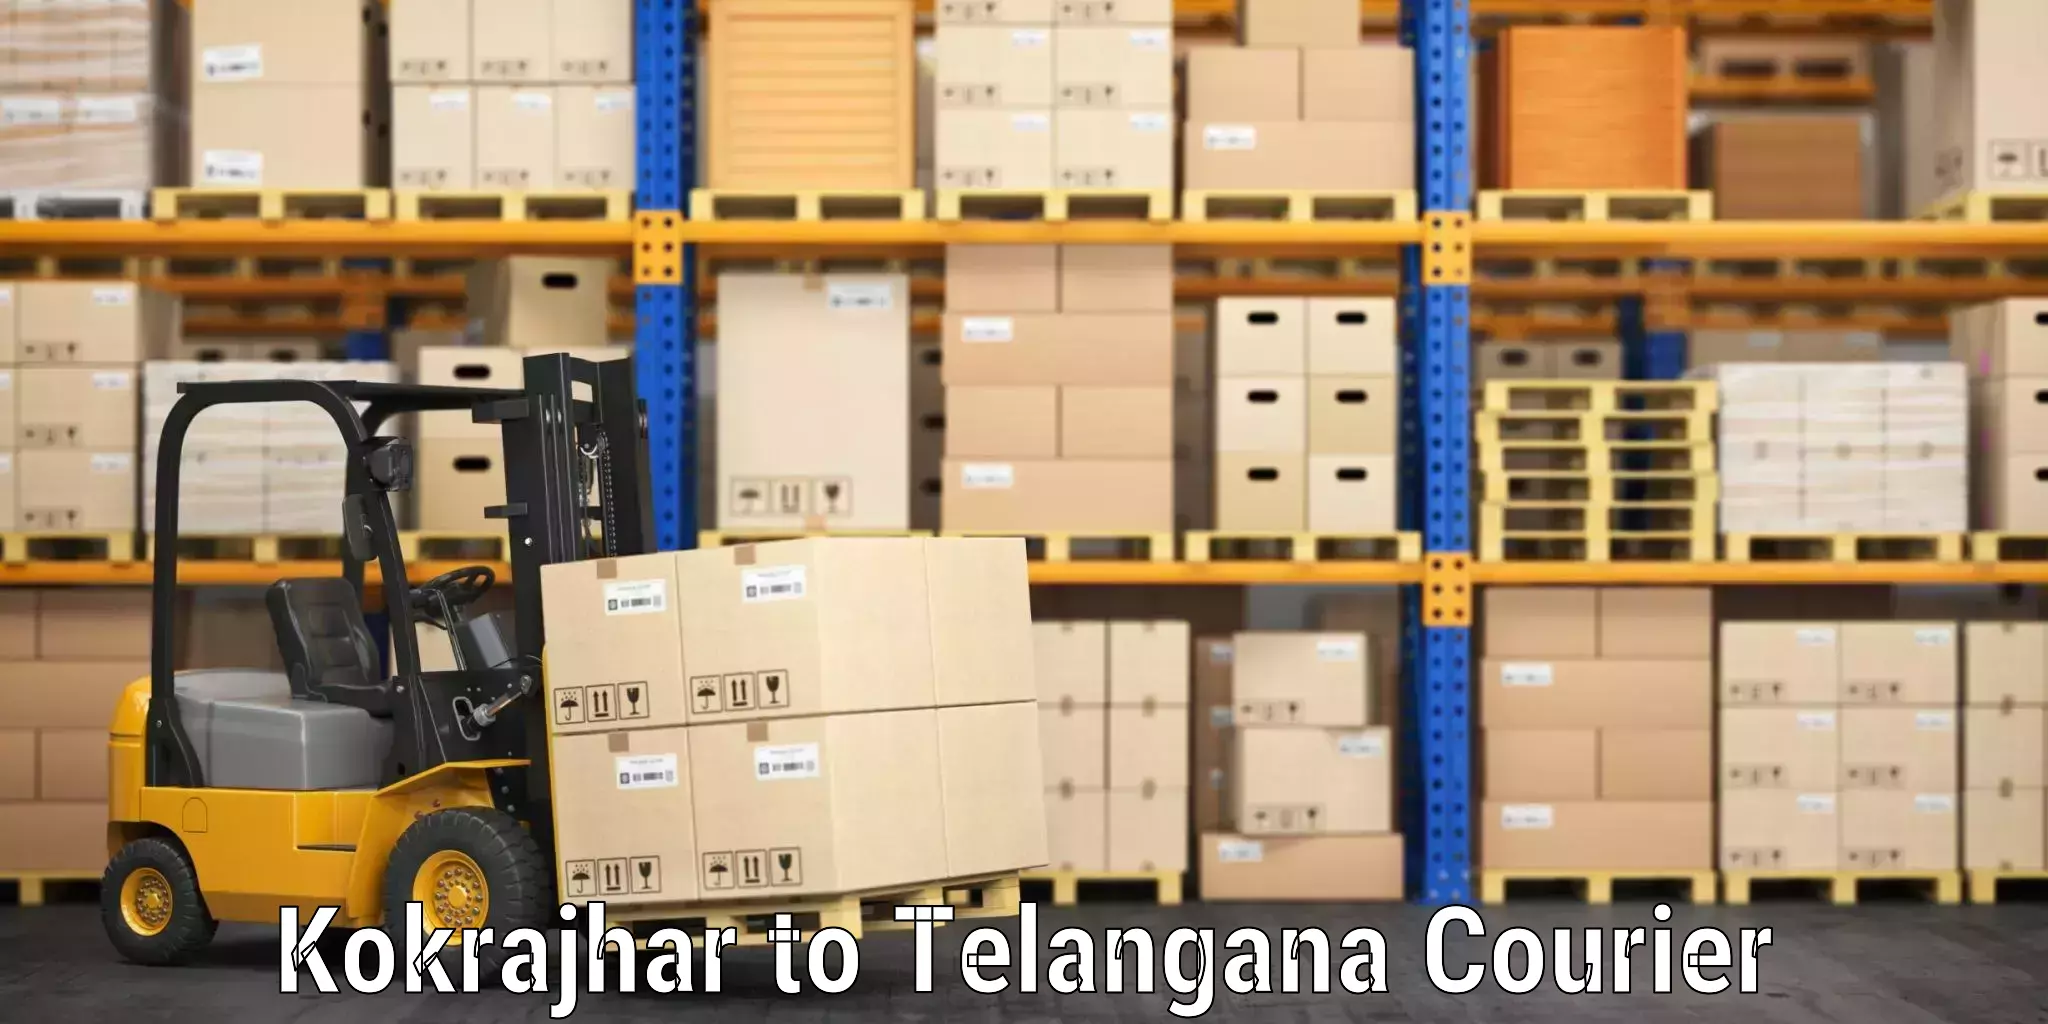 Luggage storage and delivery Kokrajhar to Jangaon